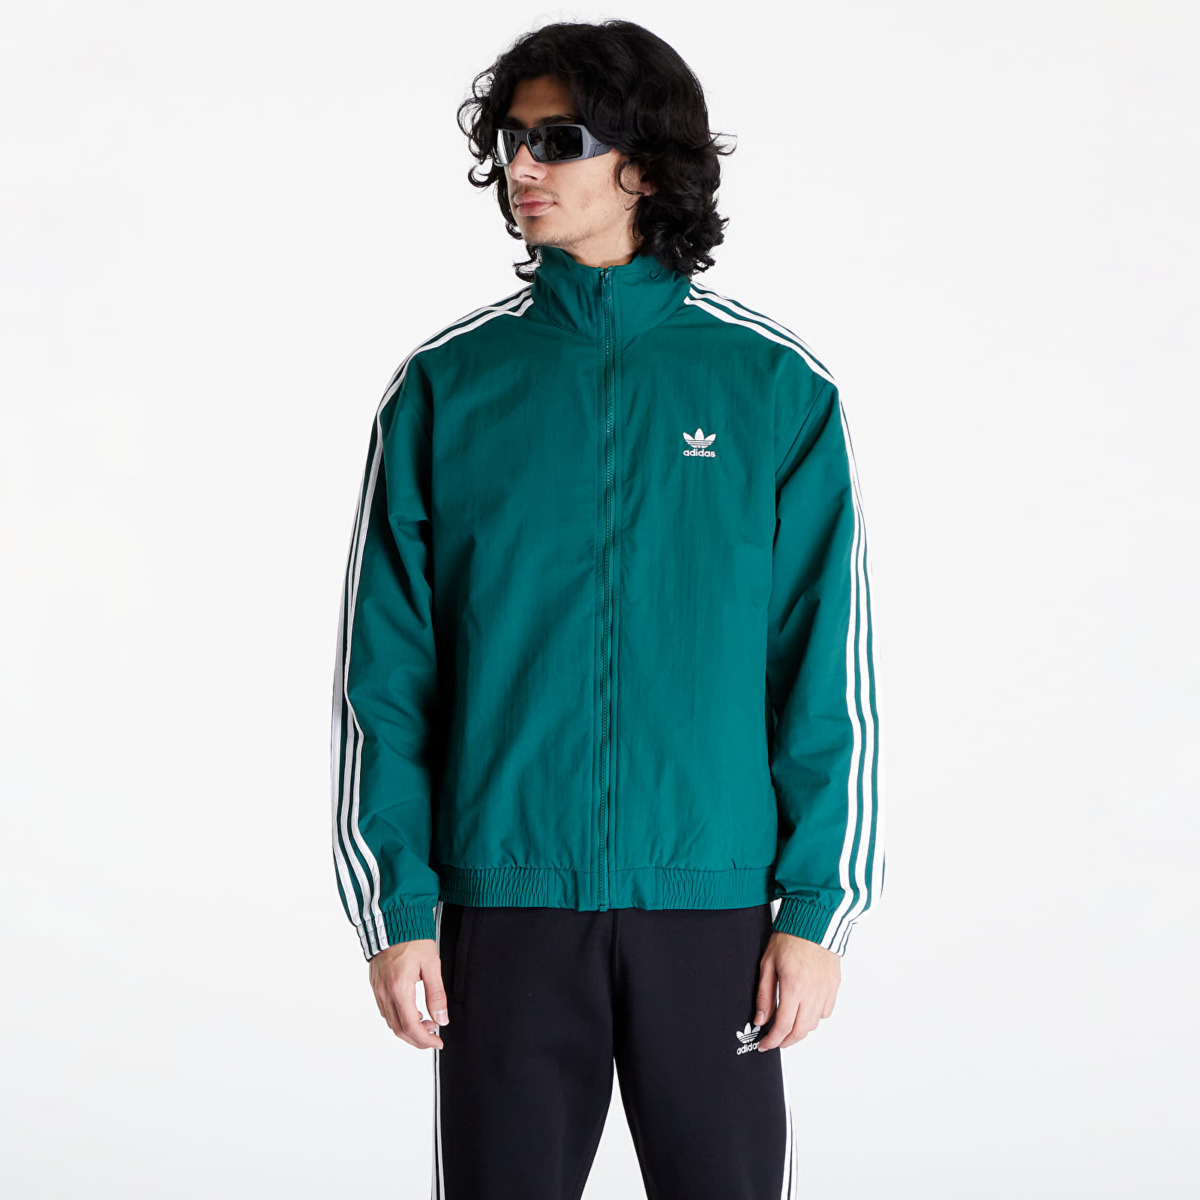 Footshop - Green Jacket for Men from Adidas GOOFASH